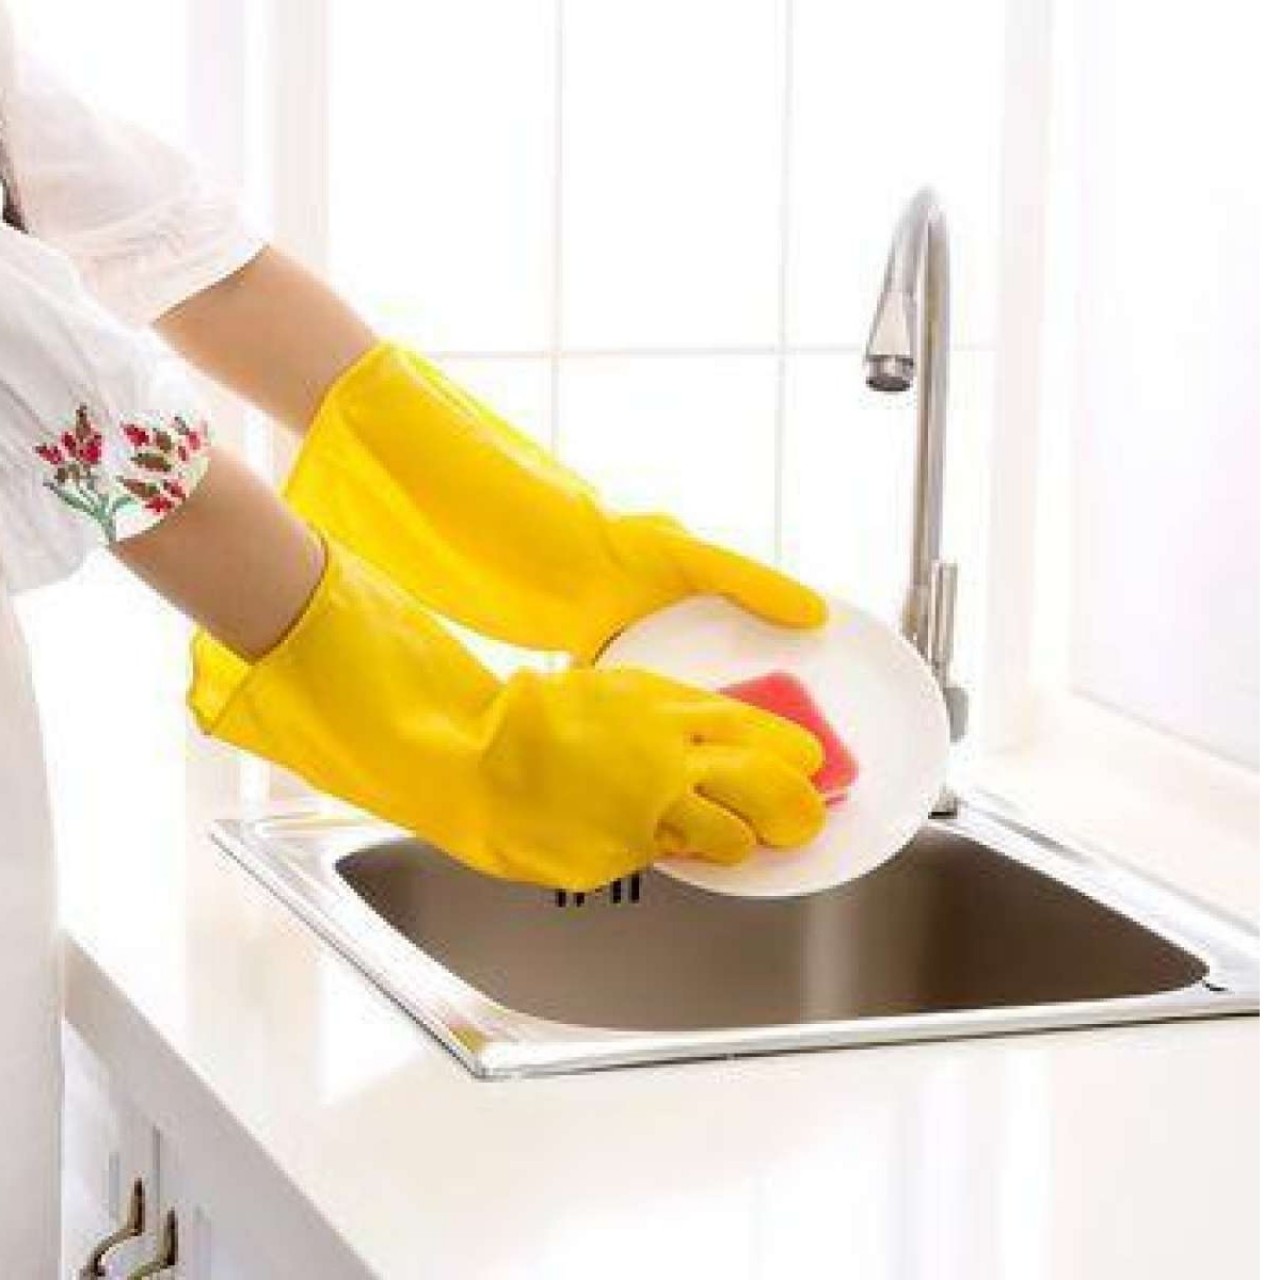 Pair Rubber Washing Gloves